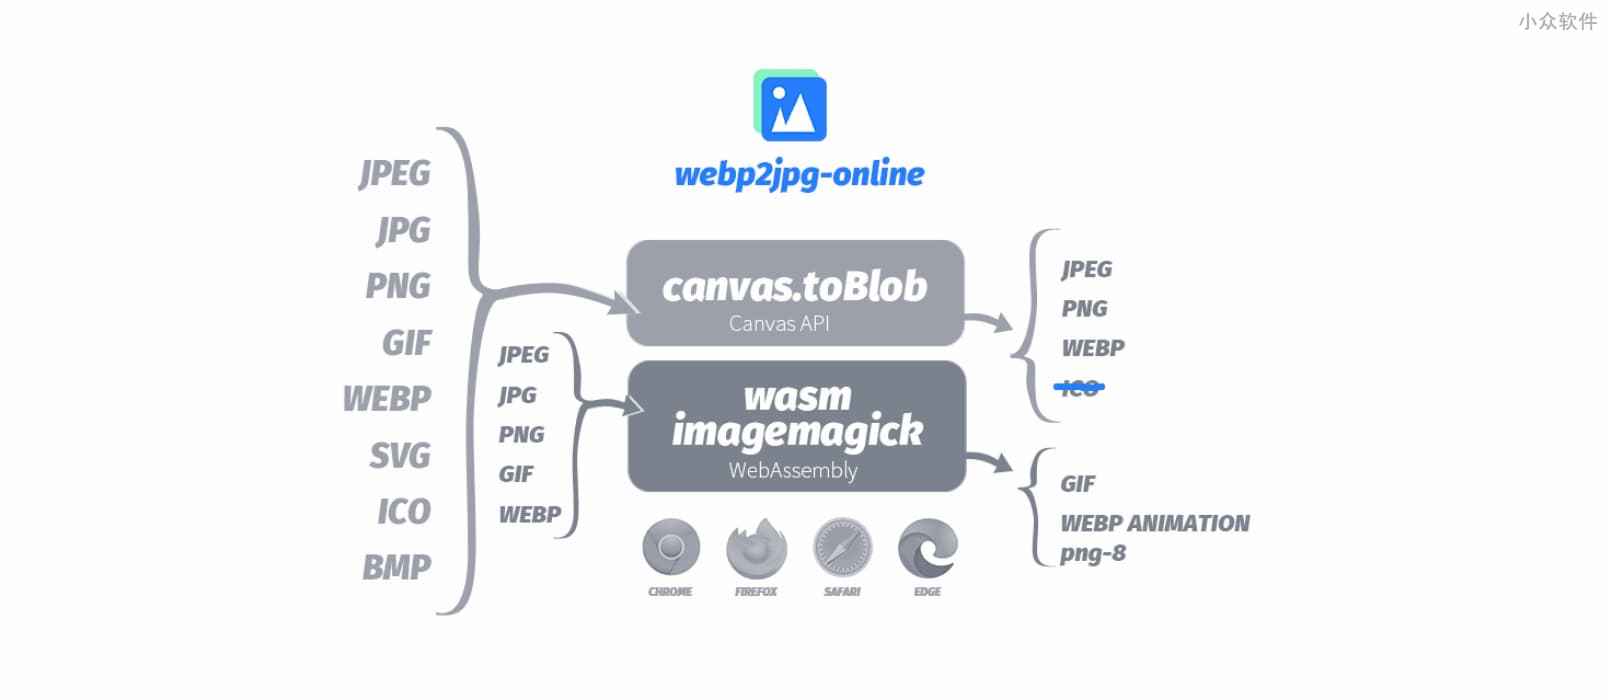 webp2jpg – 一个简单的开源在线图片格式转换工具，支持 WebP，无上传，可批量